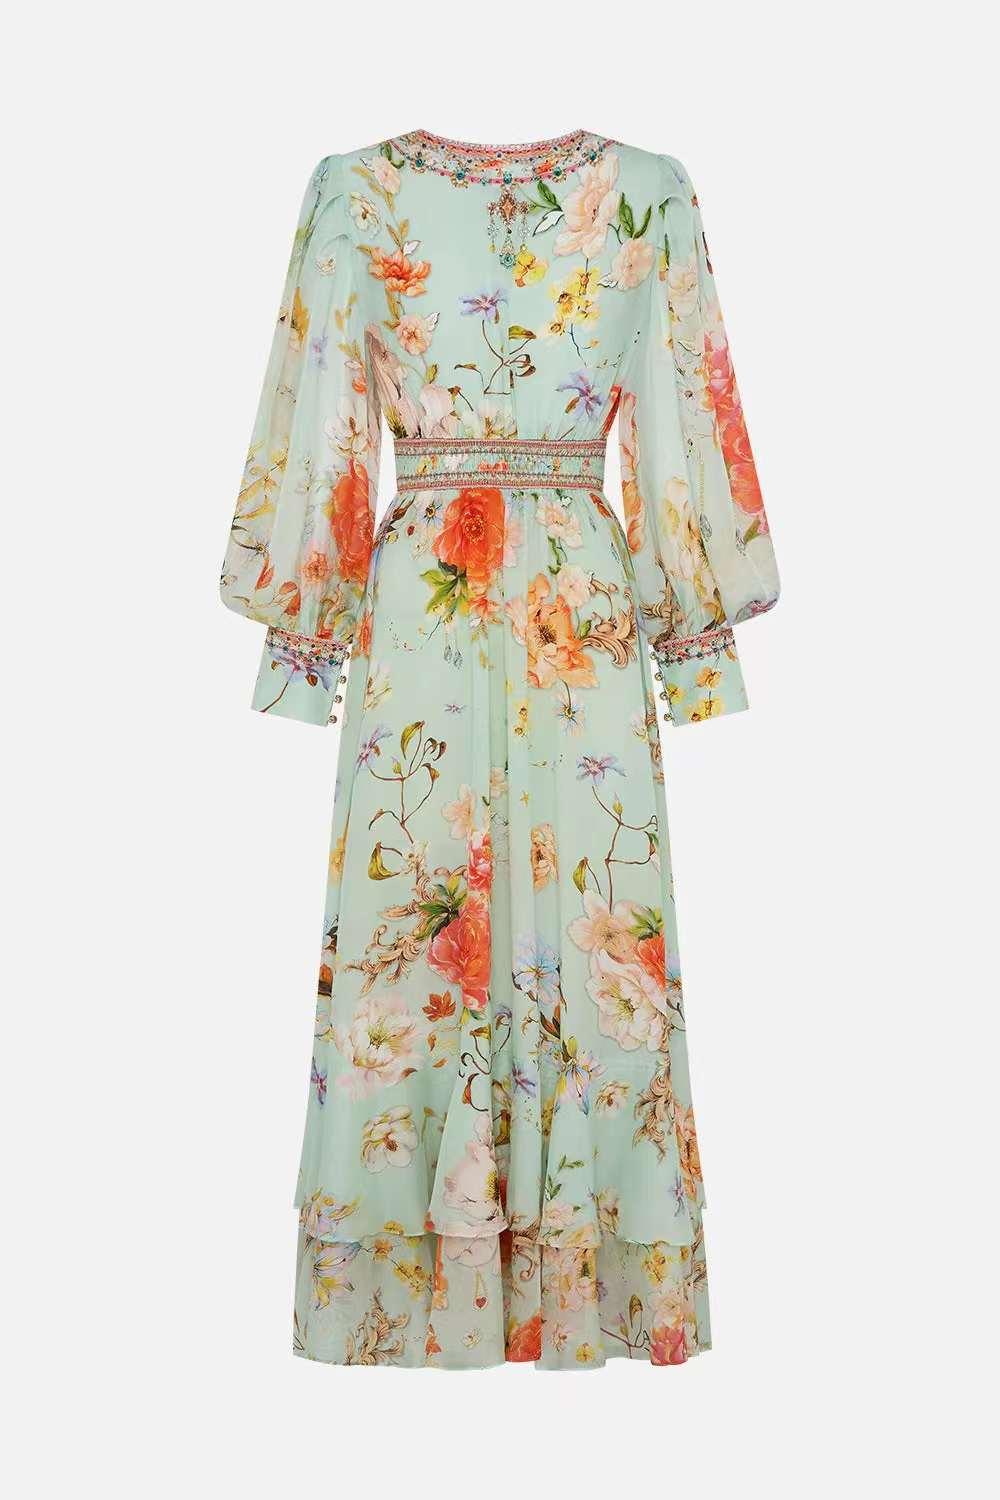 100%Silk print Maxi Dresses vacation dress - EnerChic -